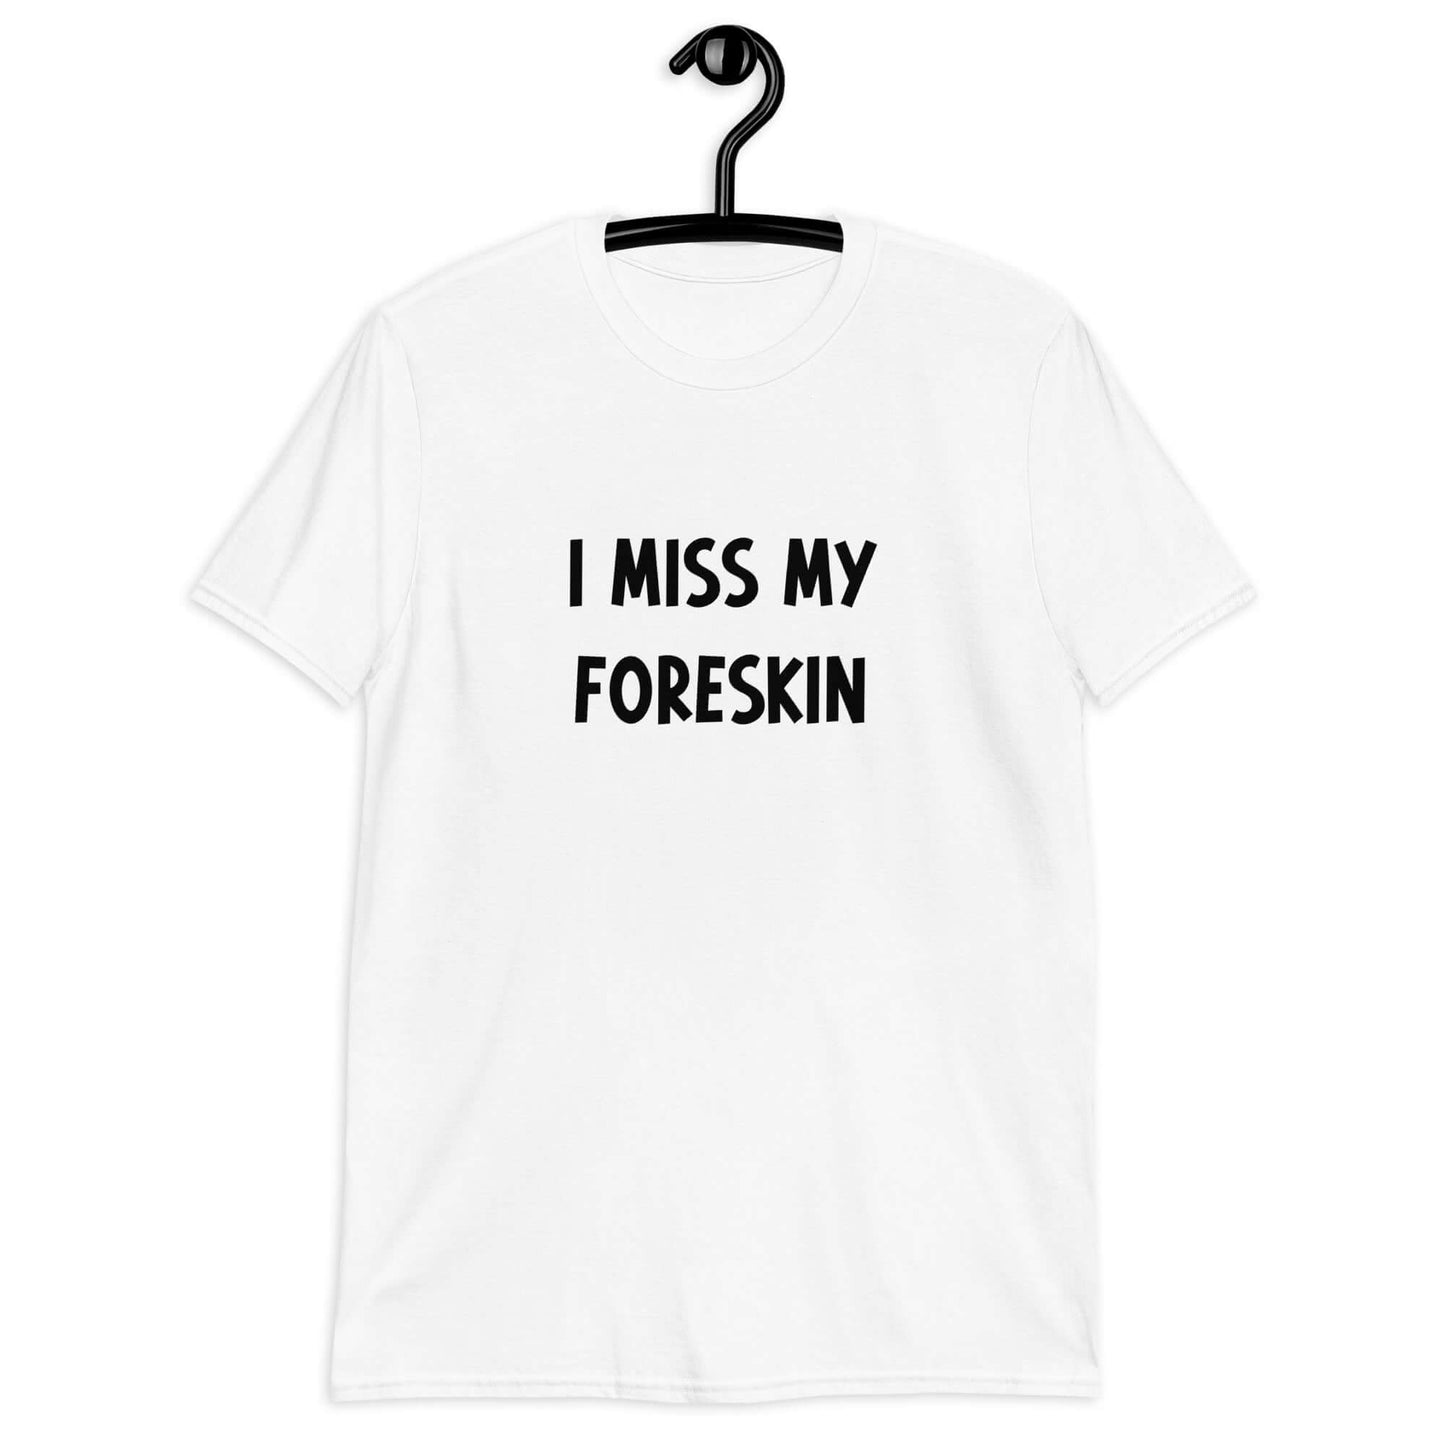 Foreskin t-shirt